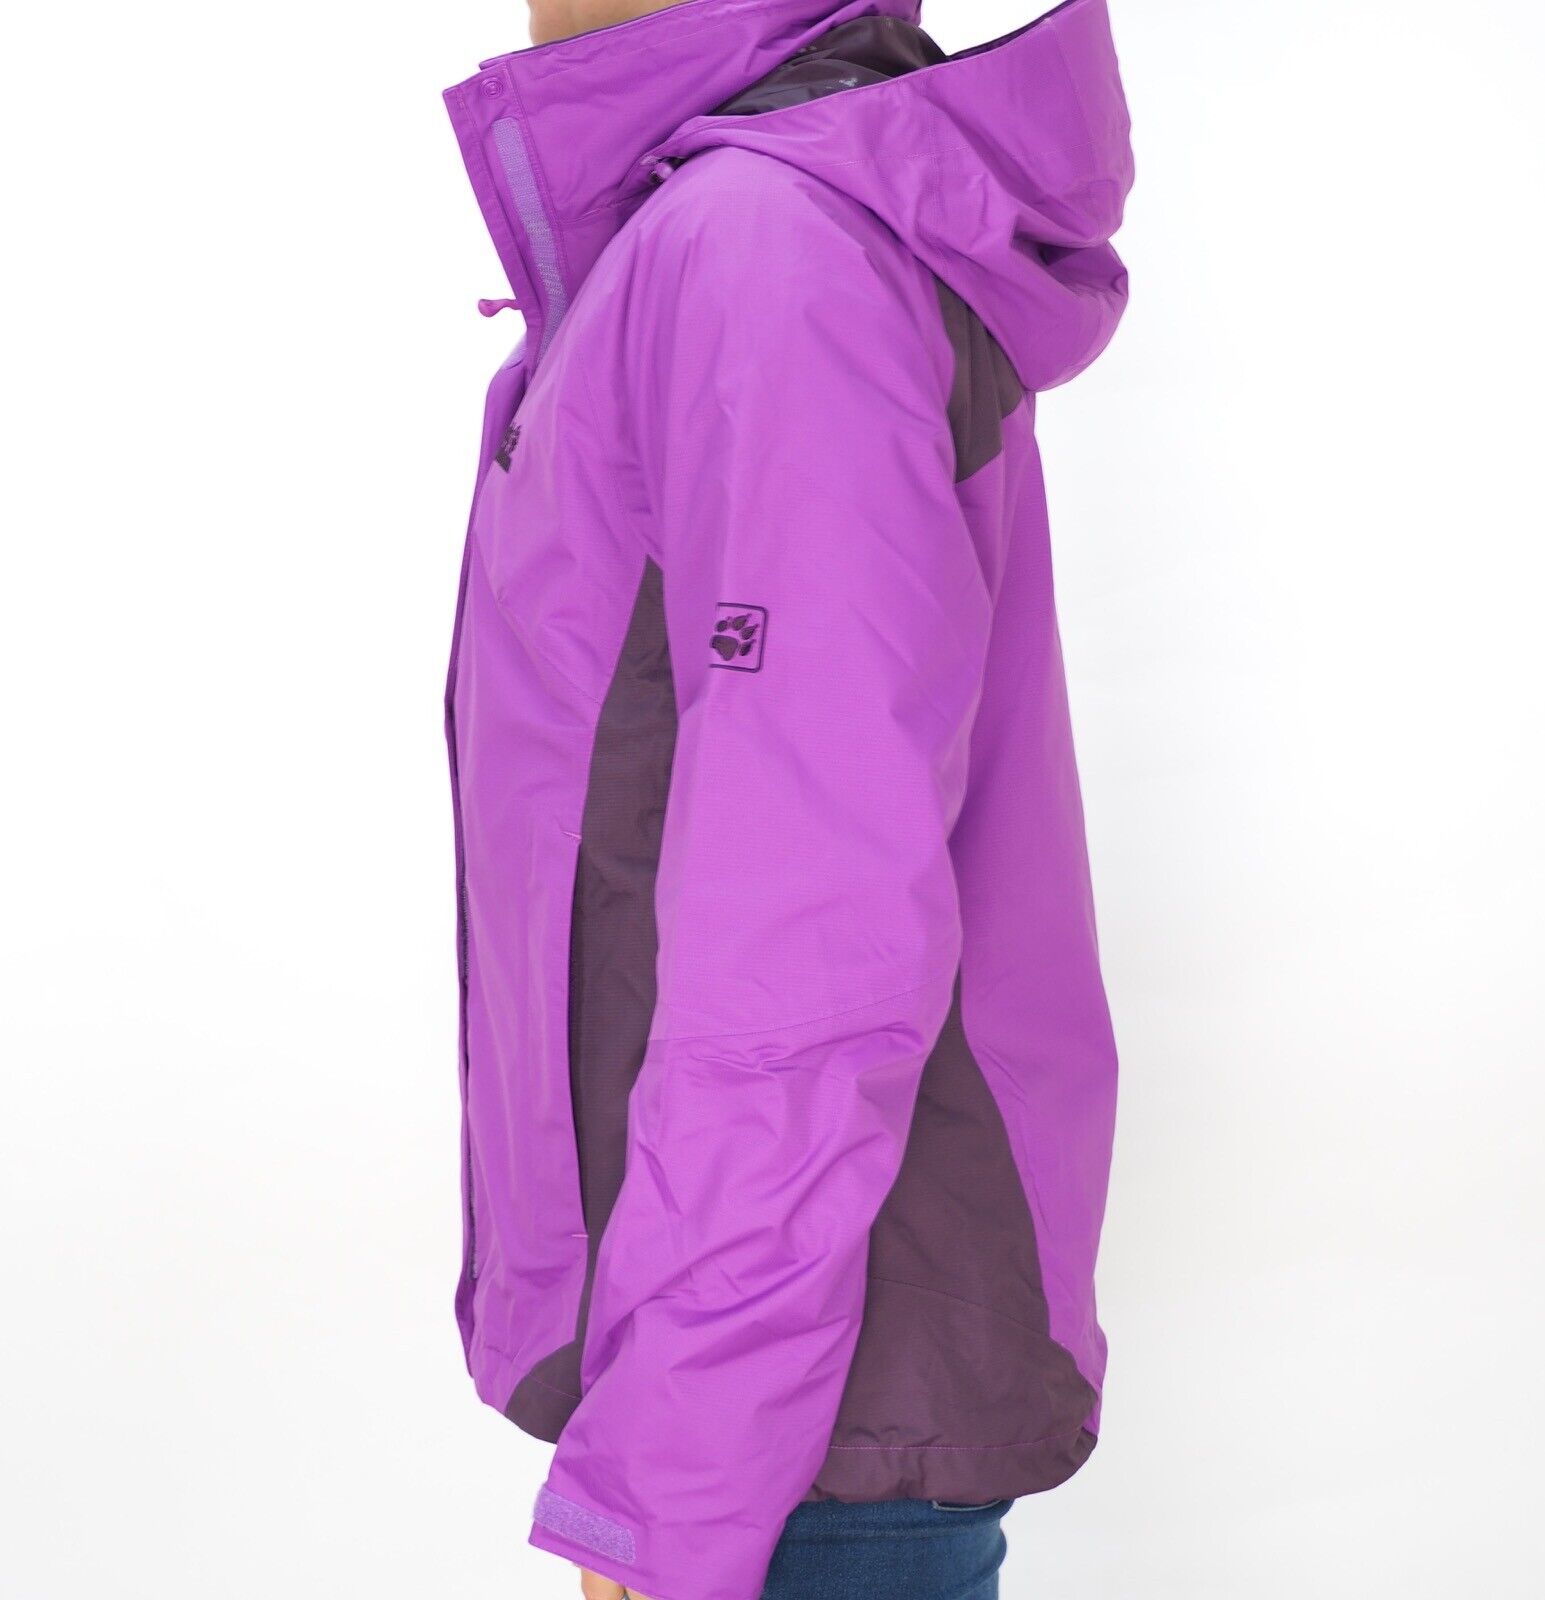 Womens Jack Wolfskin 5006521 Hyacinth Zip Up Warm Hooded Hiking Jacket - London Top Style